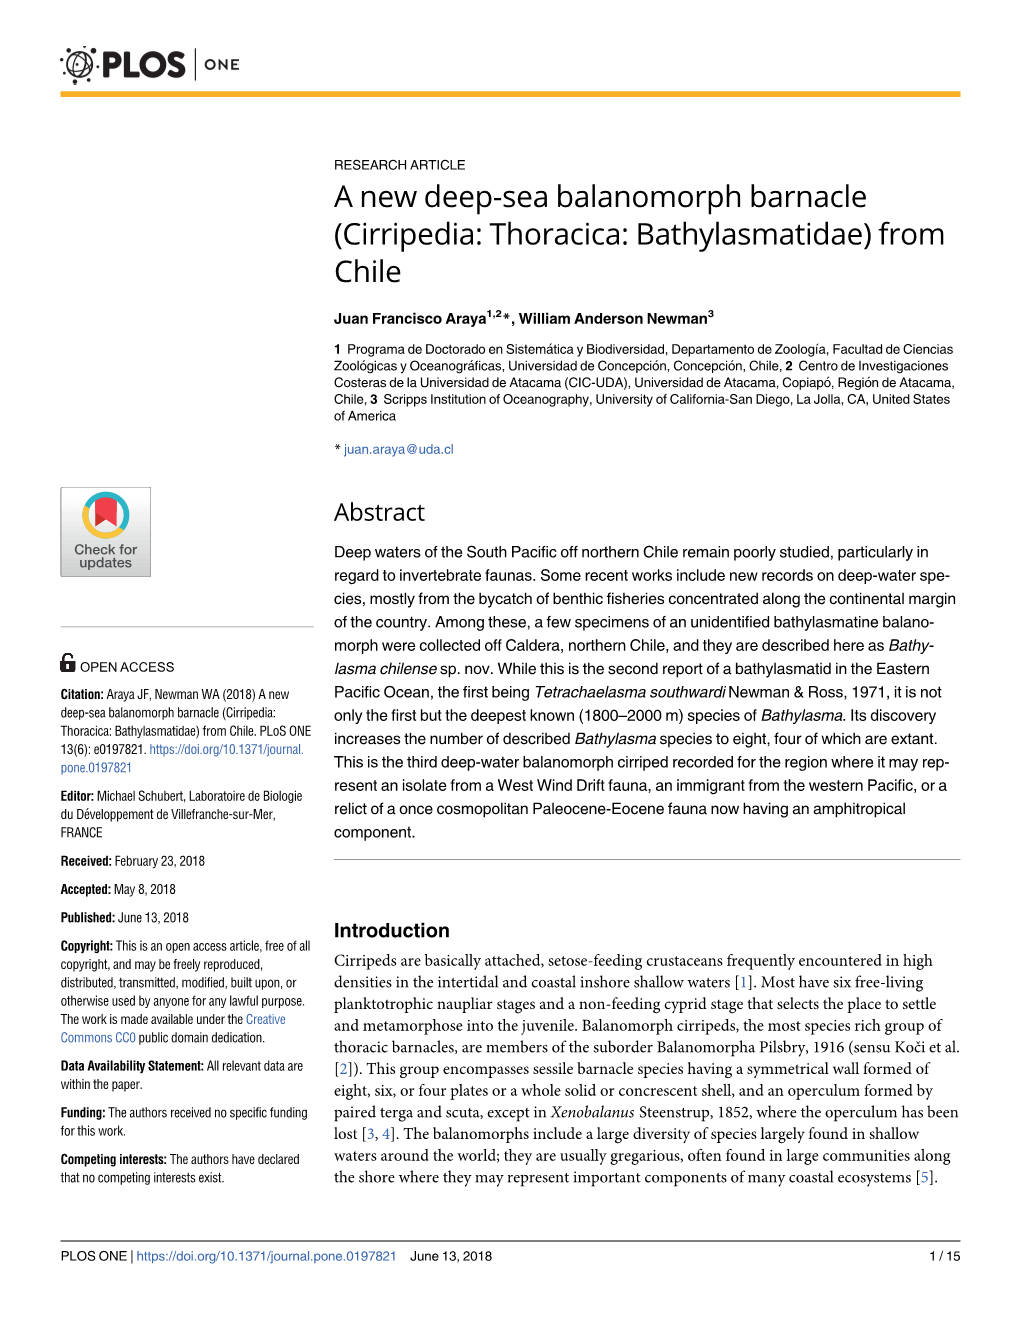 A New Deep-Sea Balanomorph Barnacle (Cirripedia: Thoracica: Bathylasmatidae) from Chile